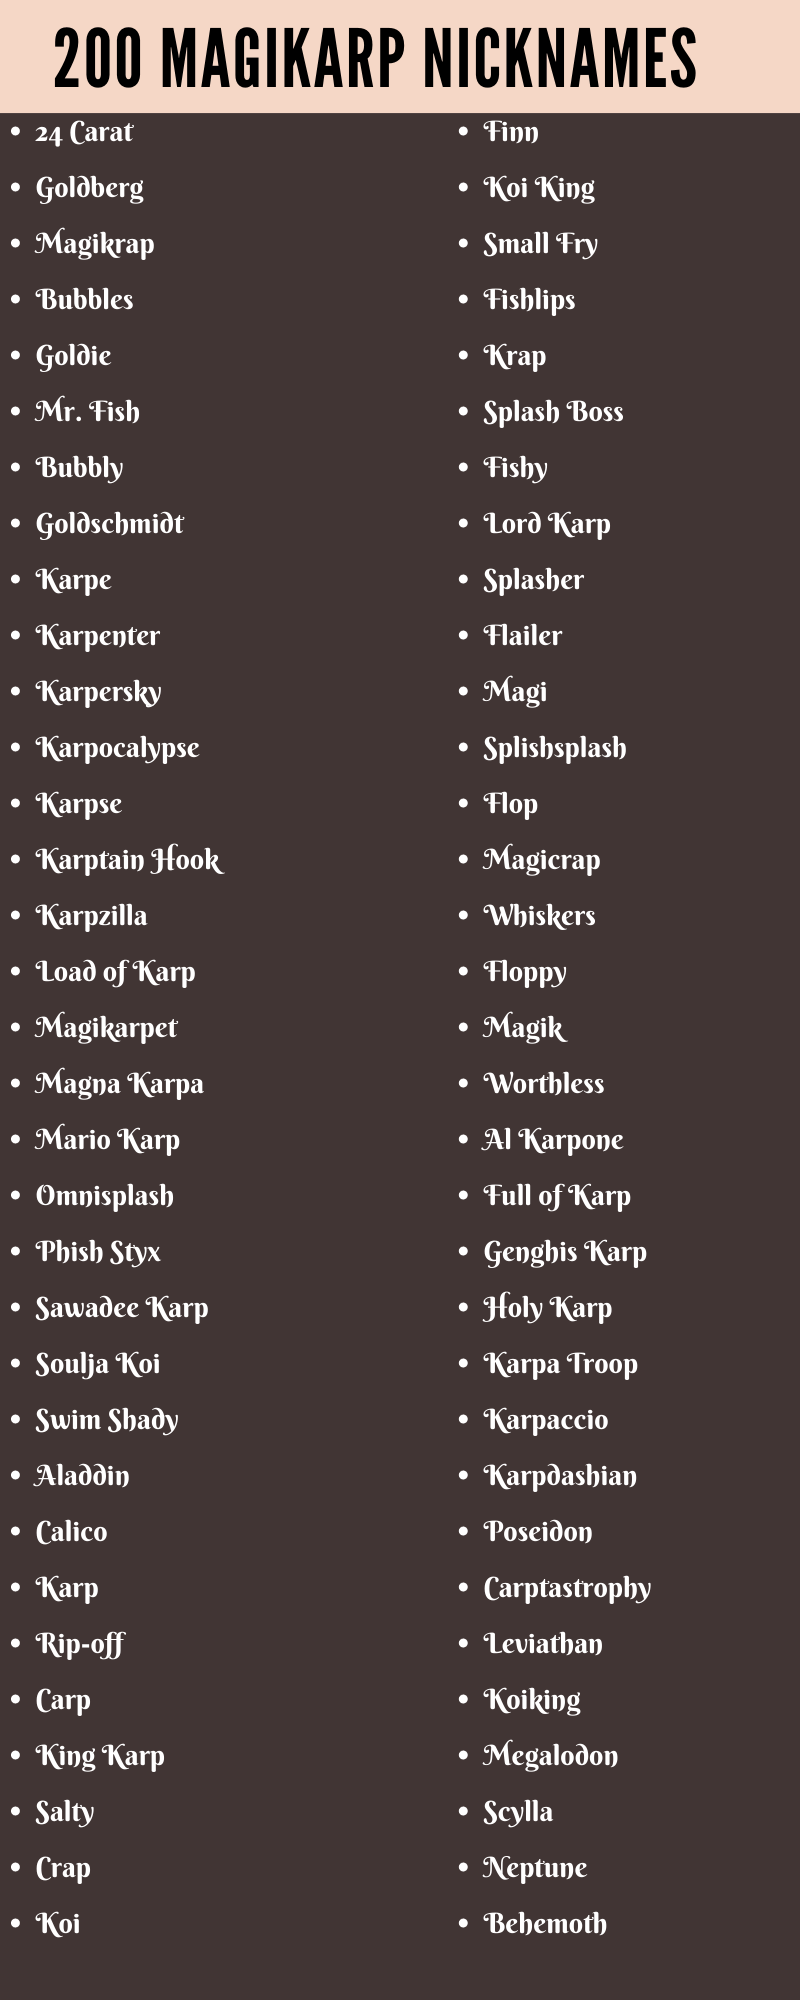 200 magikarp nicknames